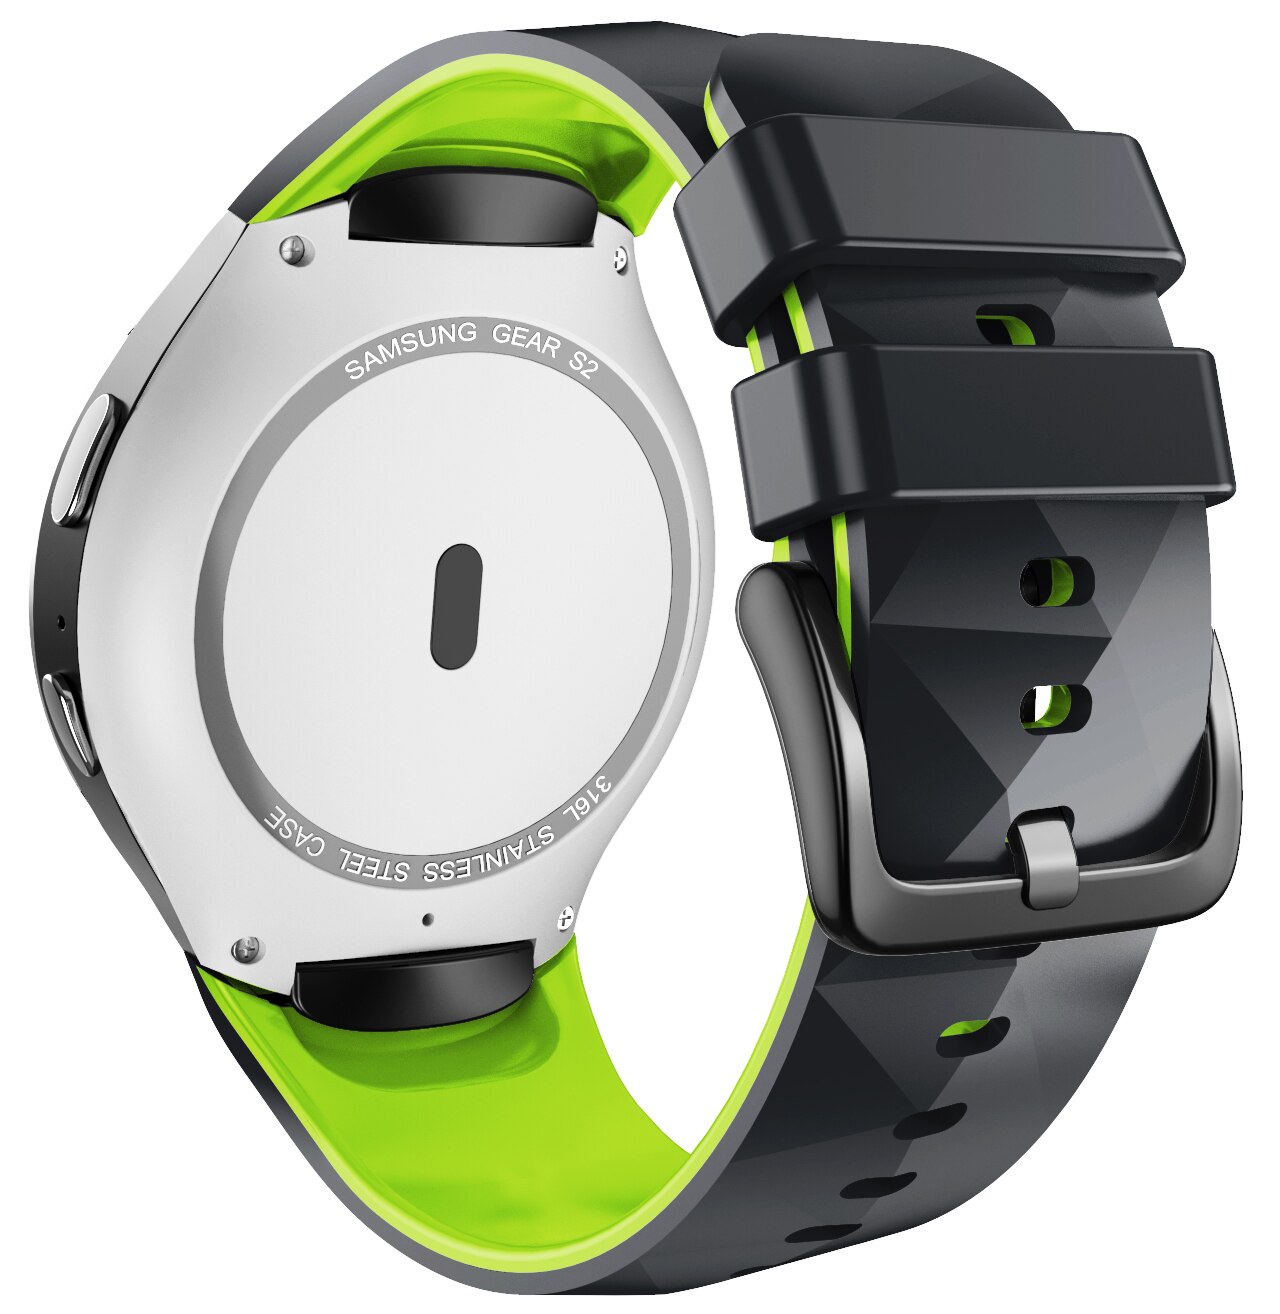 anbest-bracelet-de-sport-en-silicone-pour-samsung-galaxy-gear-s2-r720-r730-montre-intelligente-g-2.jpg